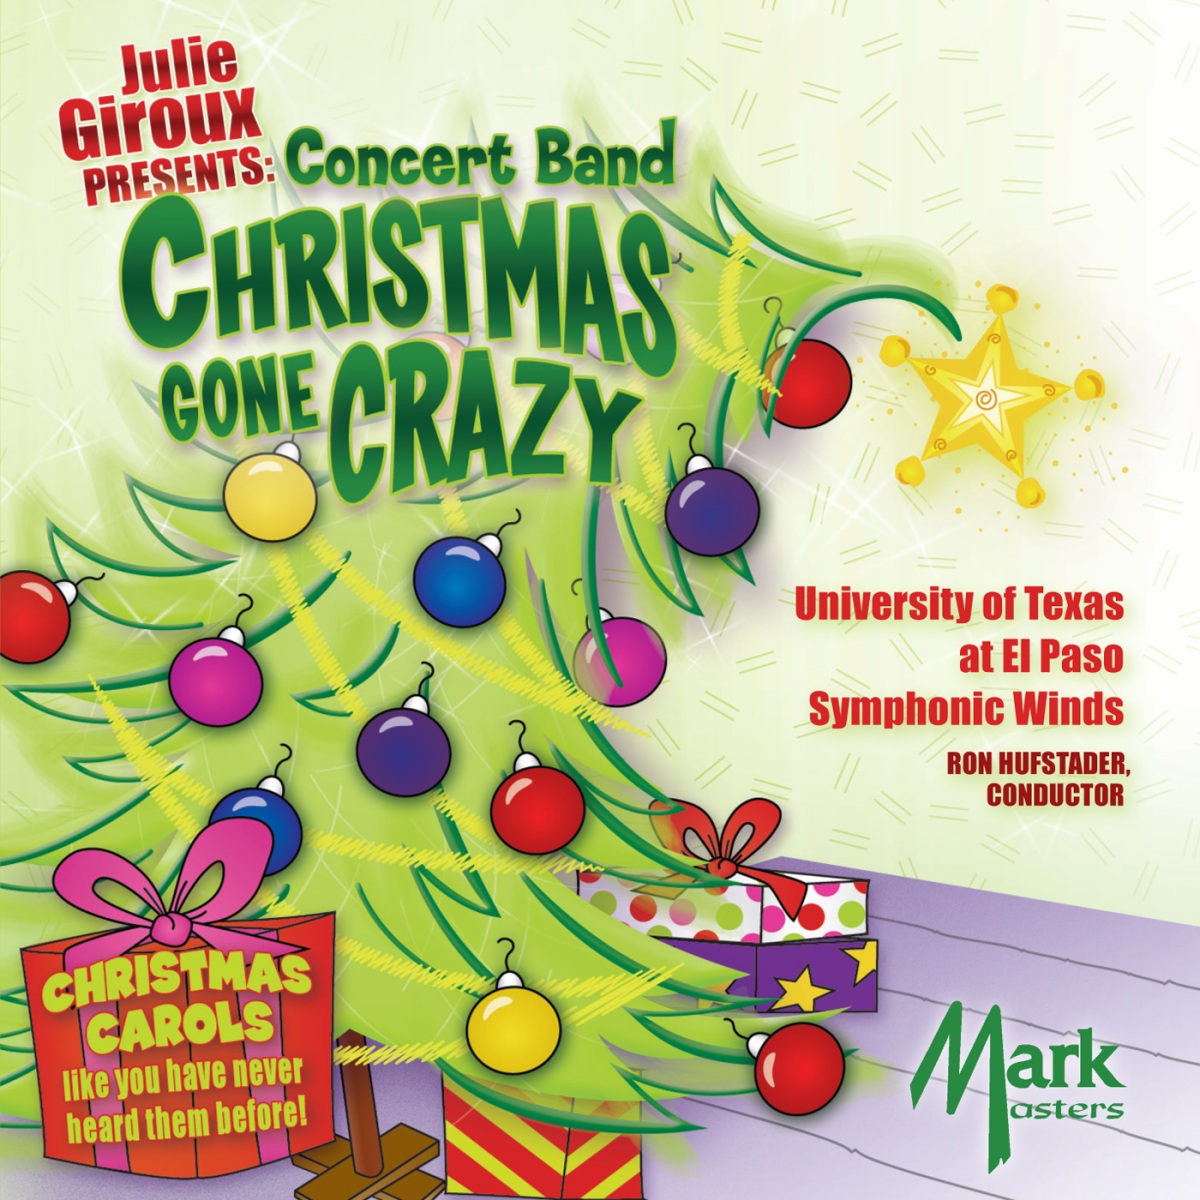 Julie Giroux Presents: Concert Band Christmas Gone Crazy - clicca qui